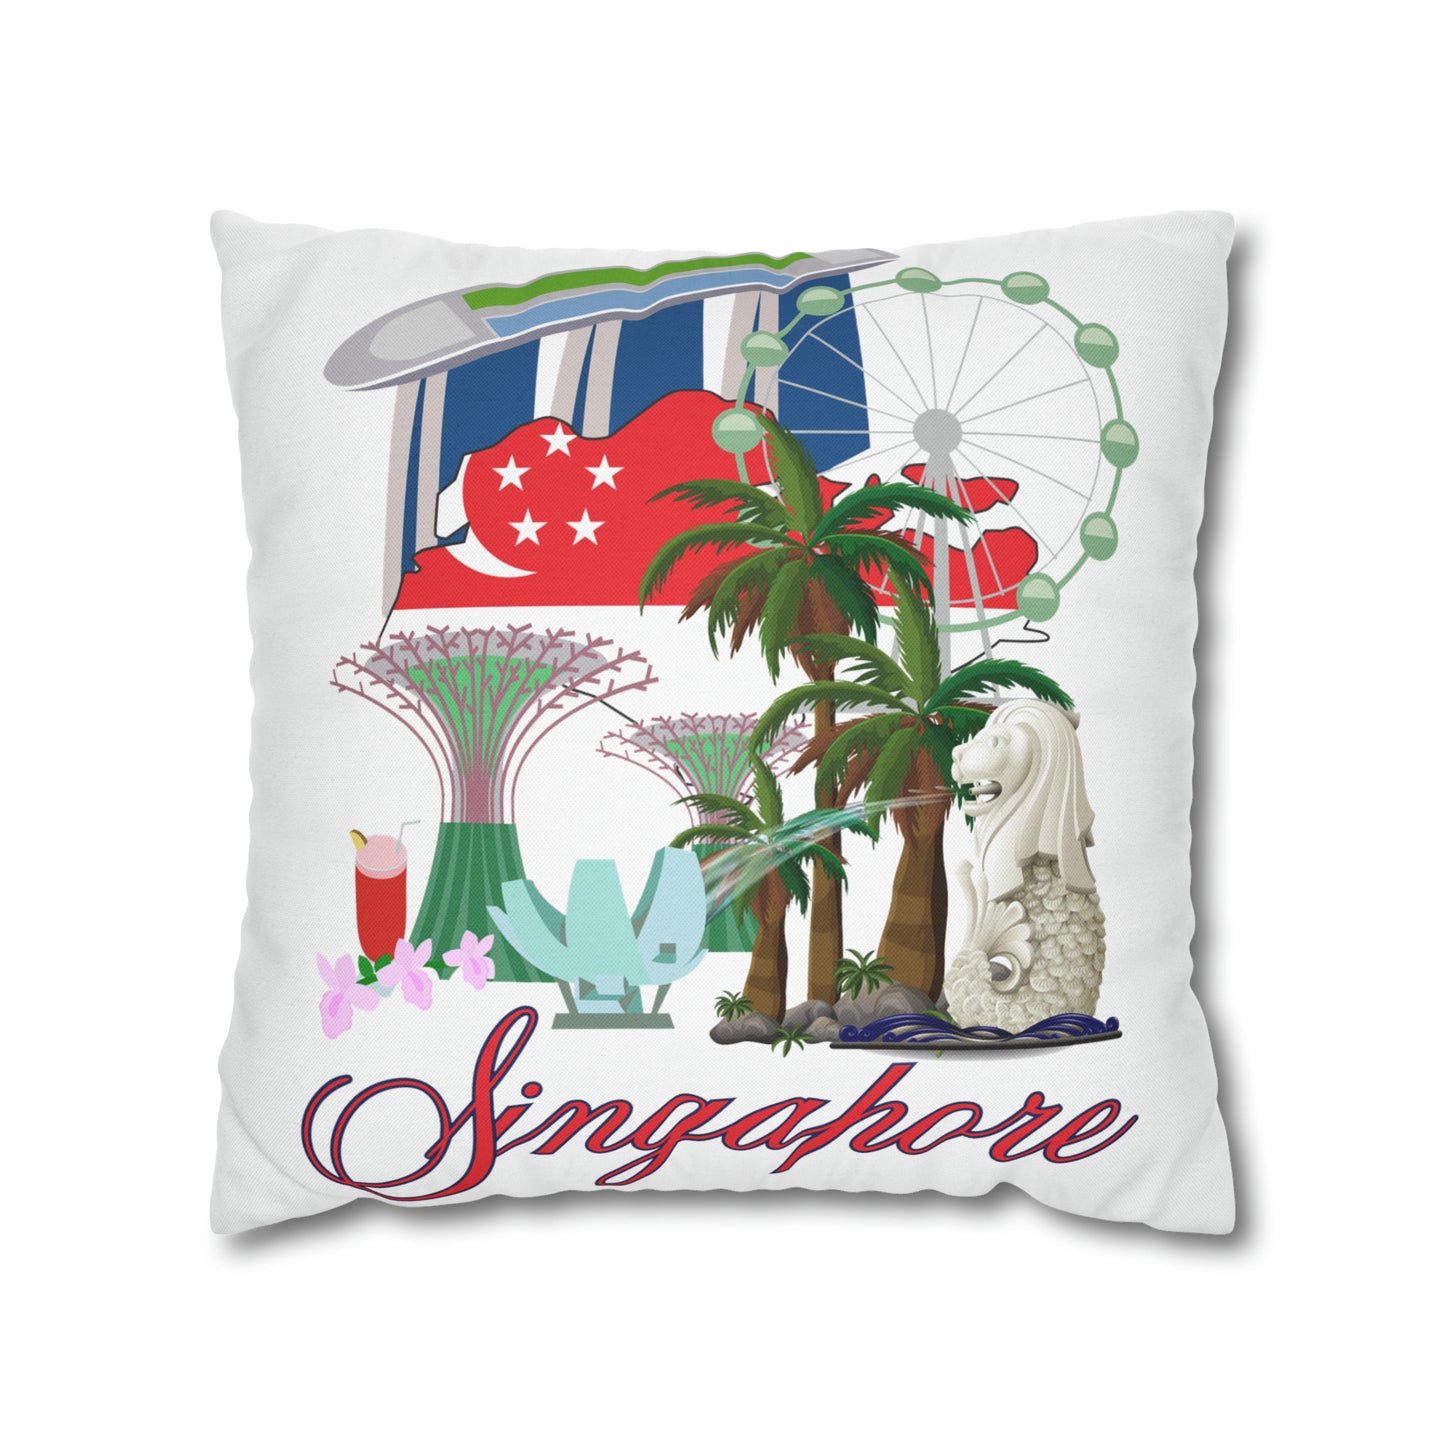 Singapore Spun Polyester Square Pillow Case